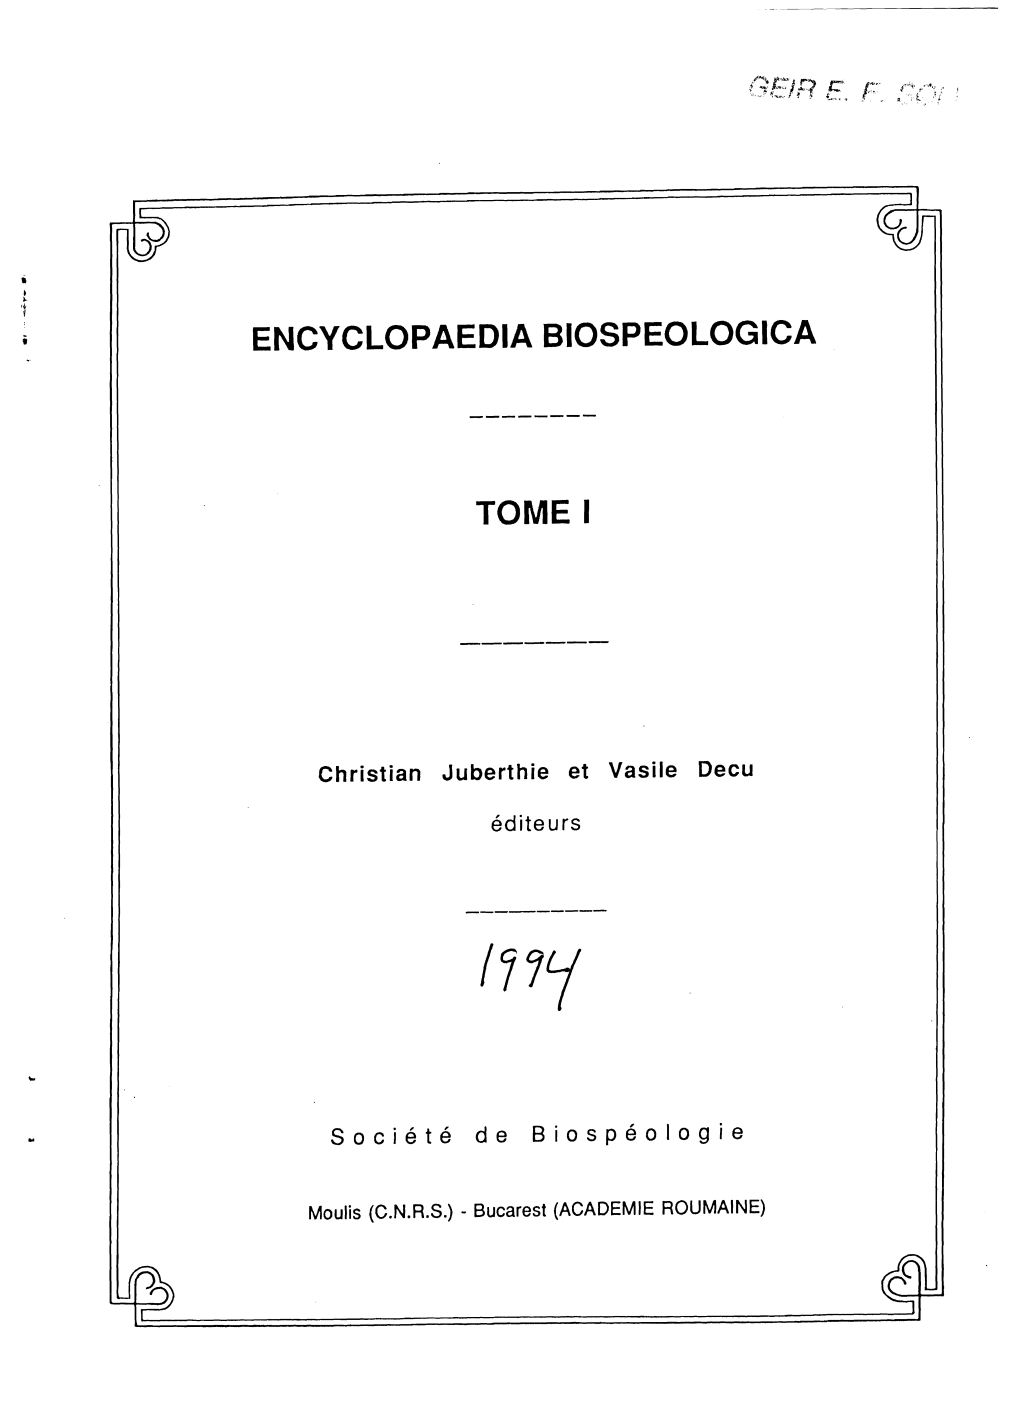 Matile L. Encyclopedia Biospeologica Diptera